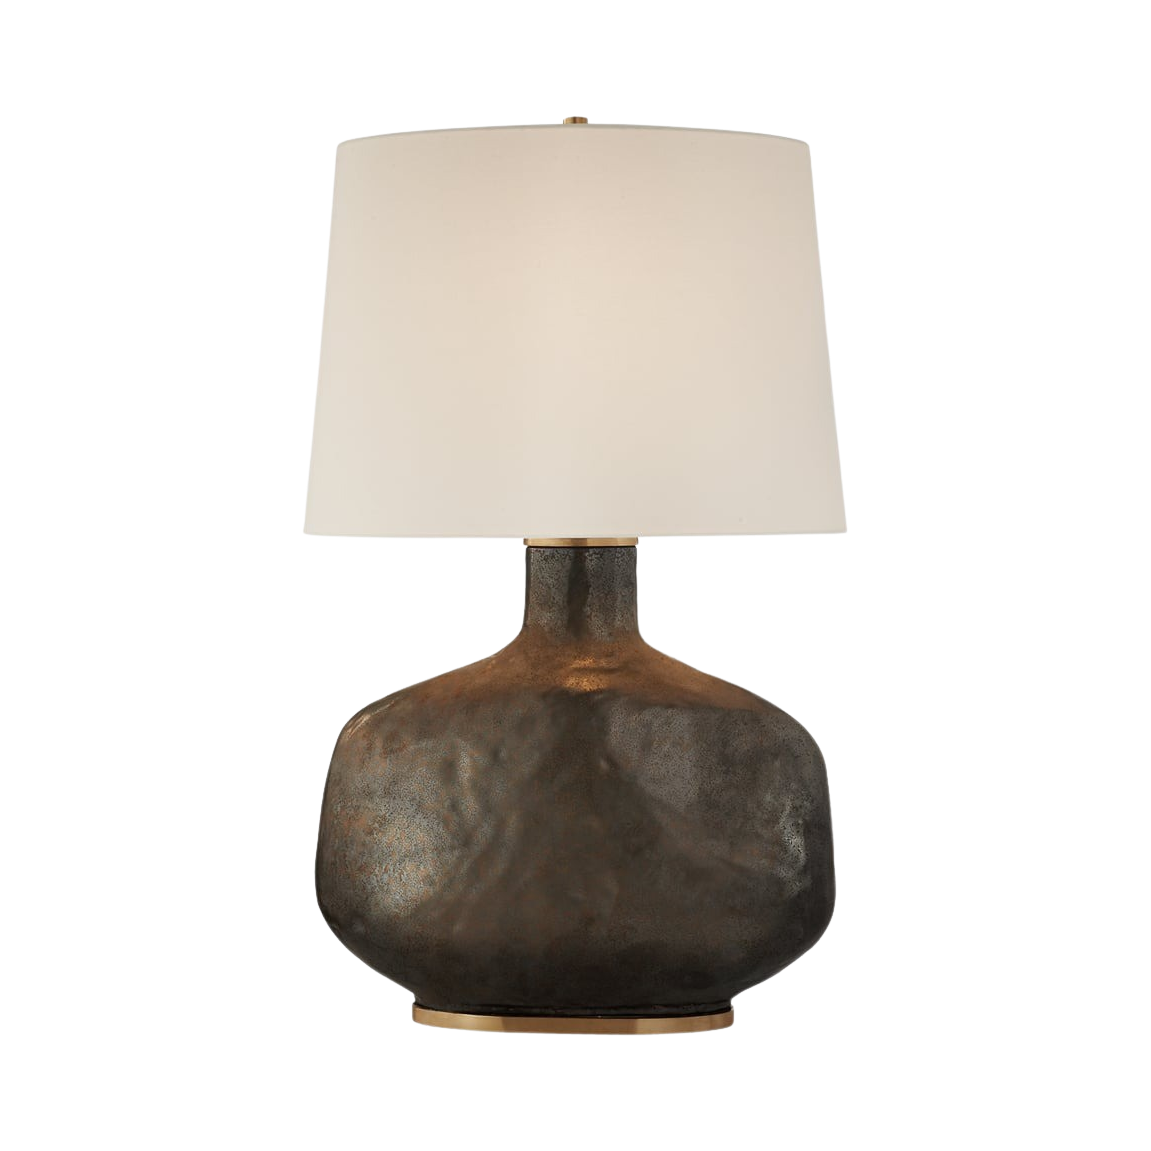 90758 Kelly Wearstler BETON Table lamp